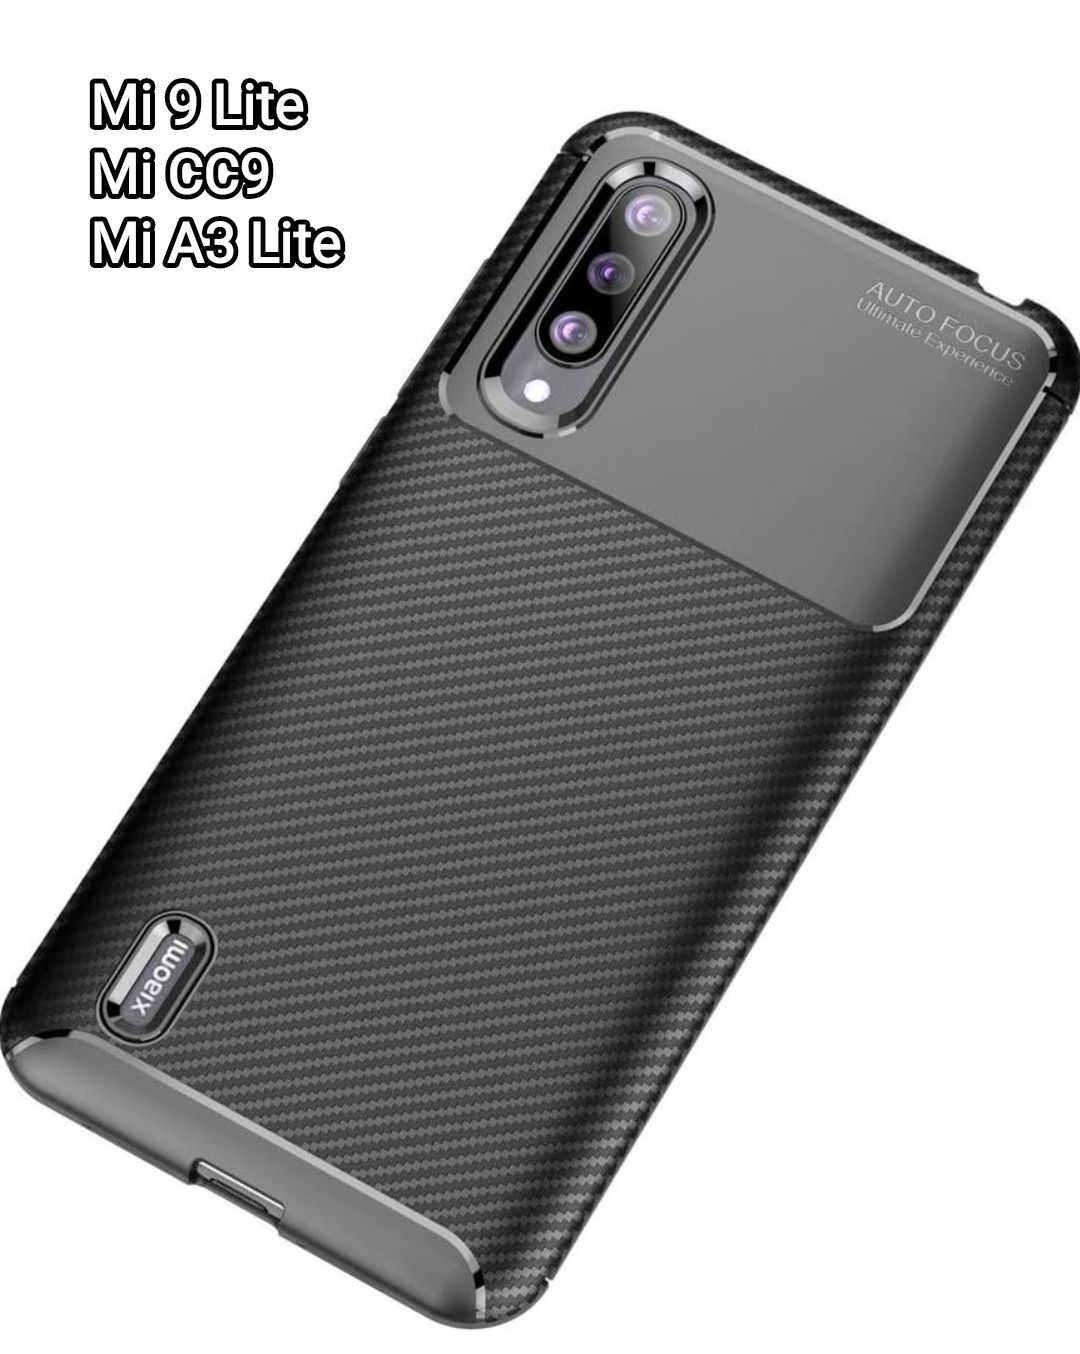 Capa T/ Carbono P/ Xiaomi Mi CC9 / Mi A3 Lite / Xiaomi Mi 9 Lite - 24h